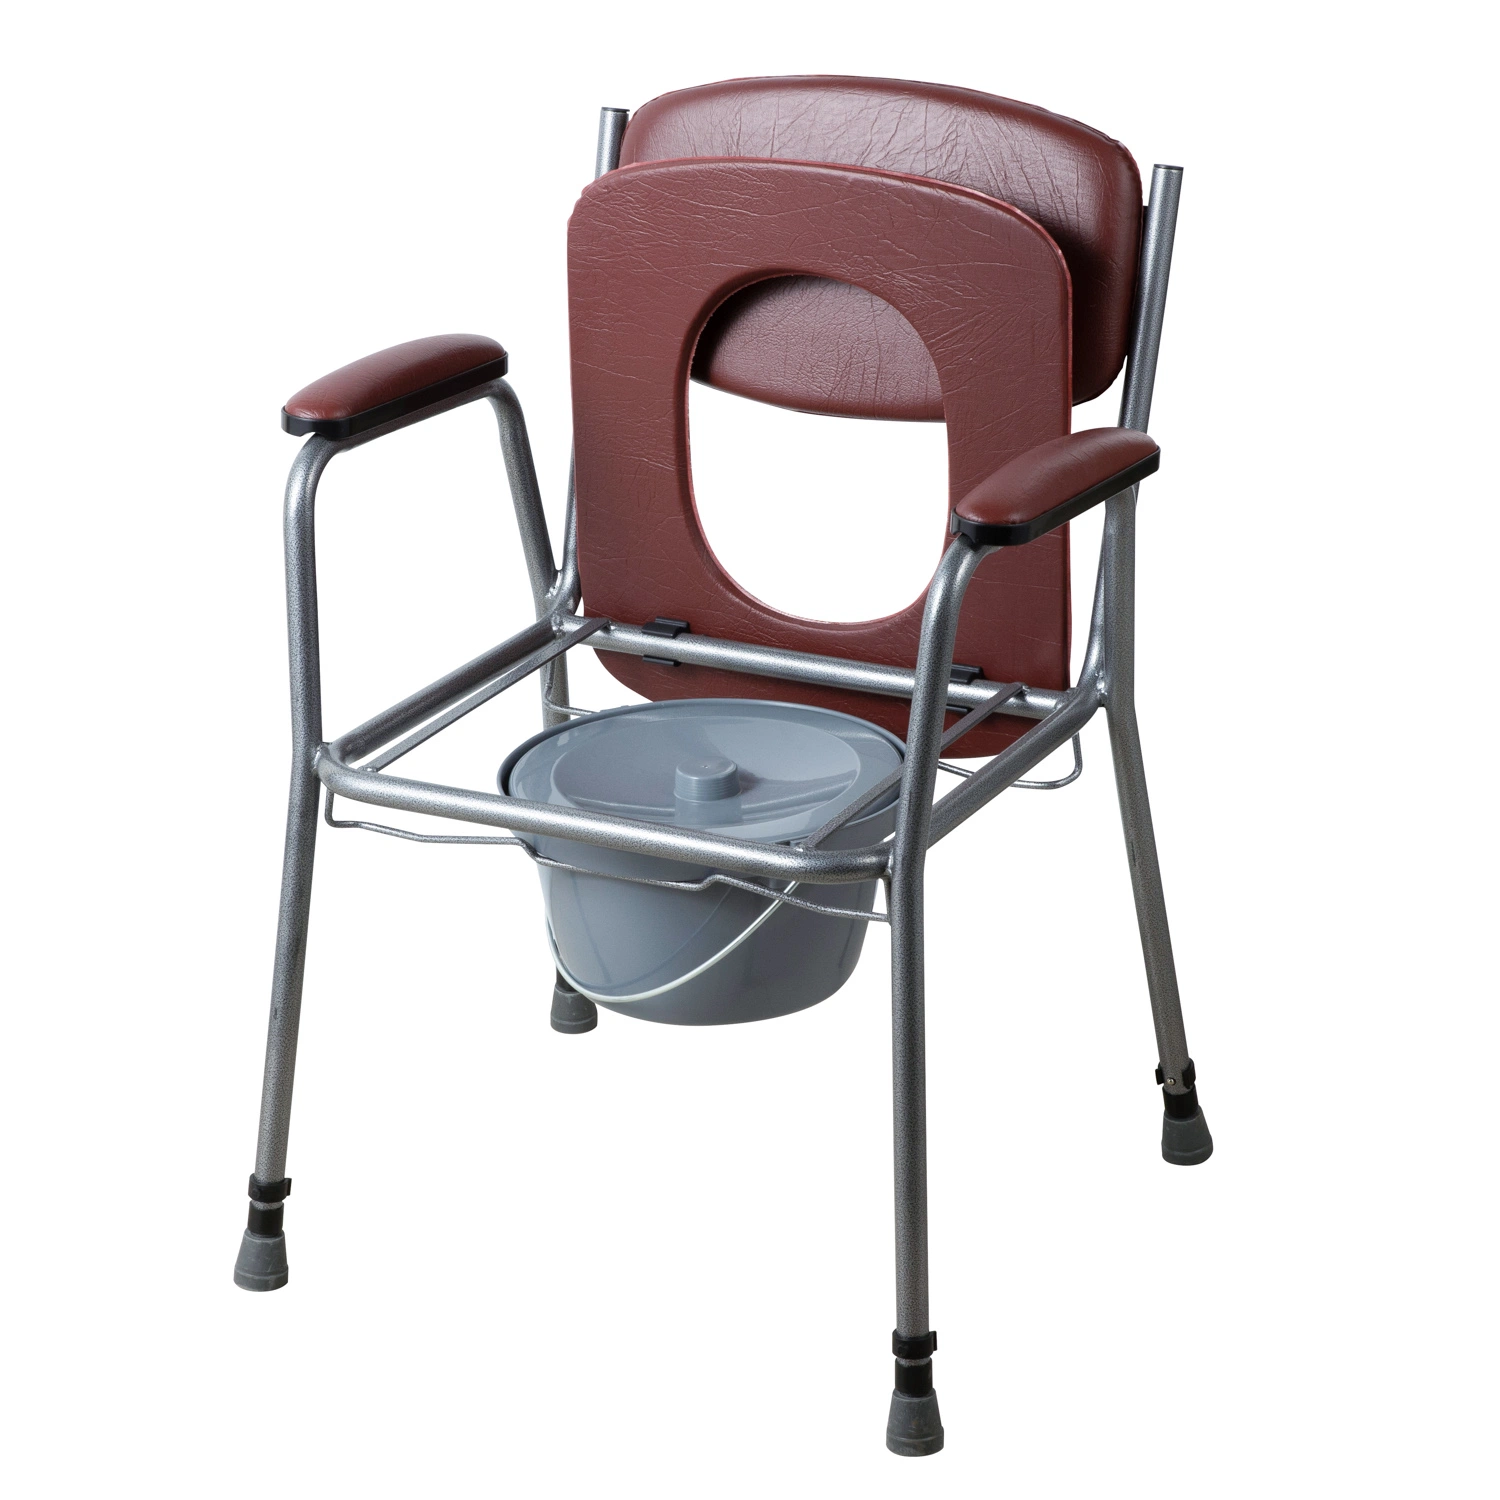 Cadeira de conforto tipo cadeira Paitent cadeira de sanita